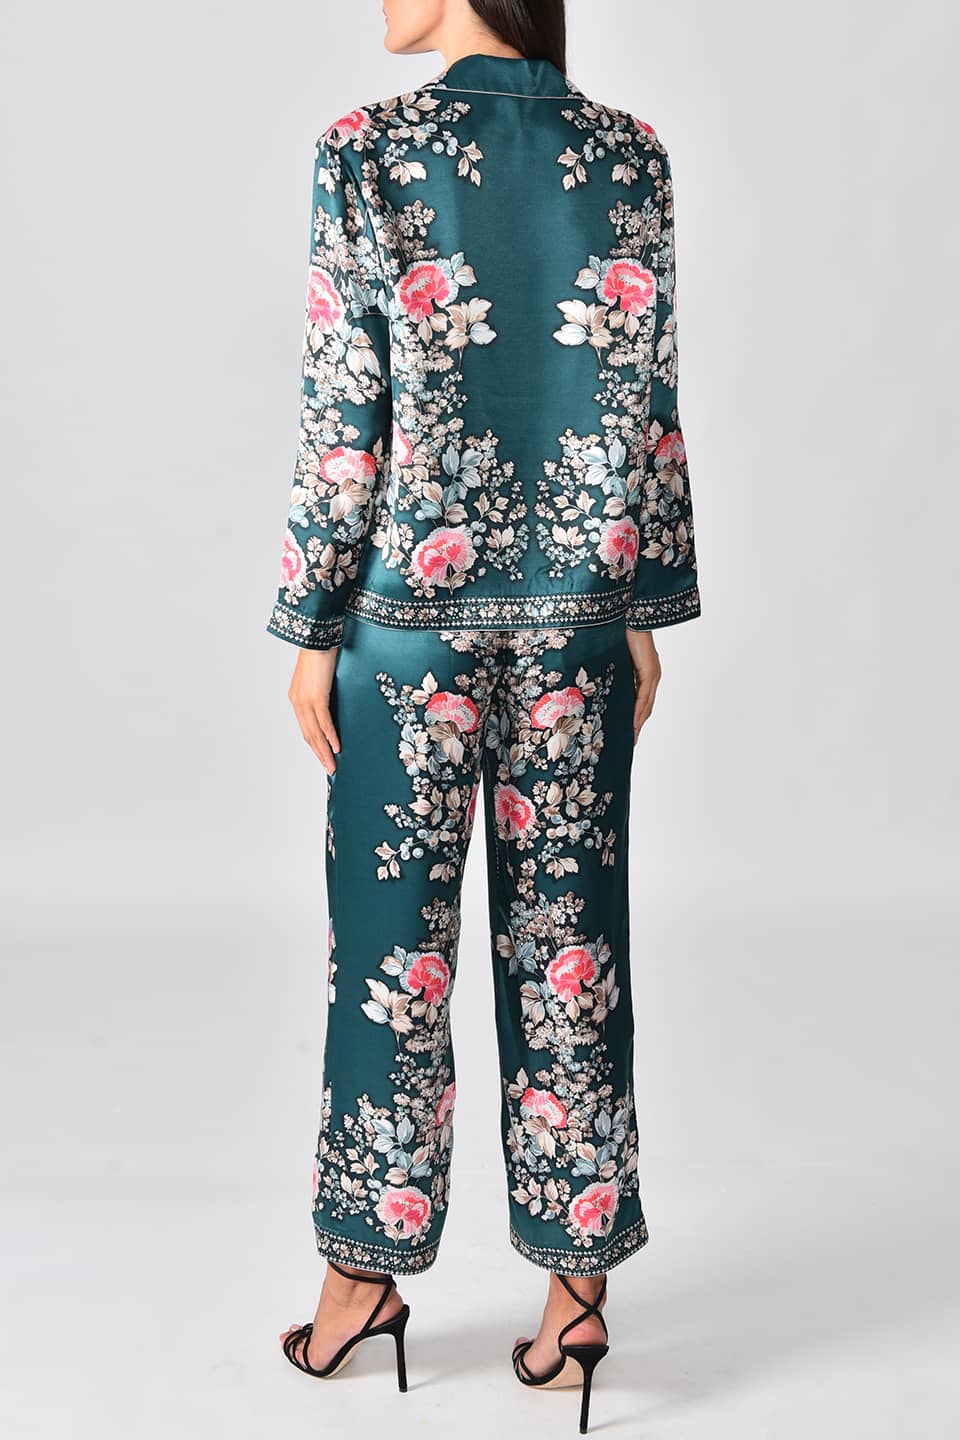 Model wearing satin pyjama style jacket from fashion designer Vilshenko, posing full body from behind